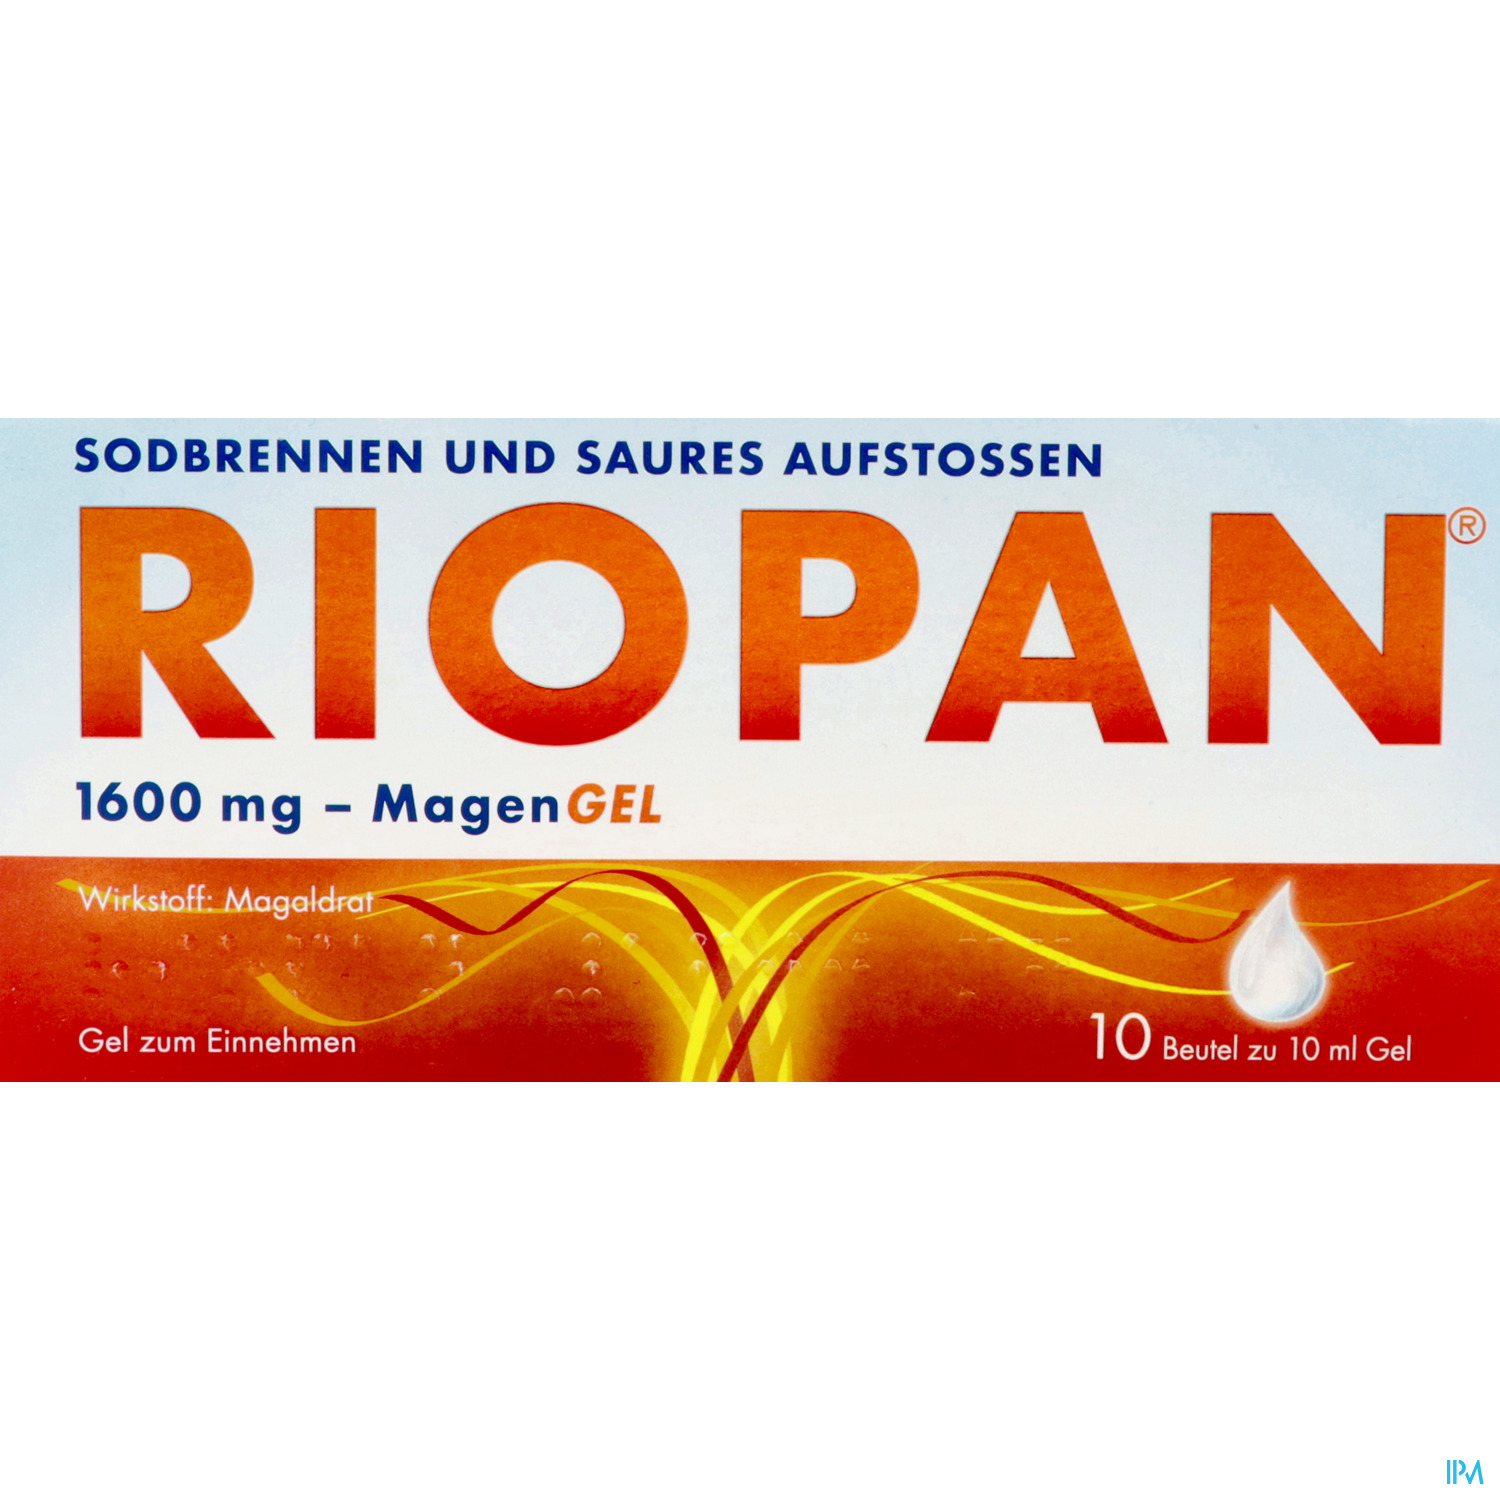 Riopan 1600 mg - MagenGel